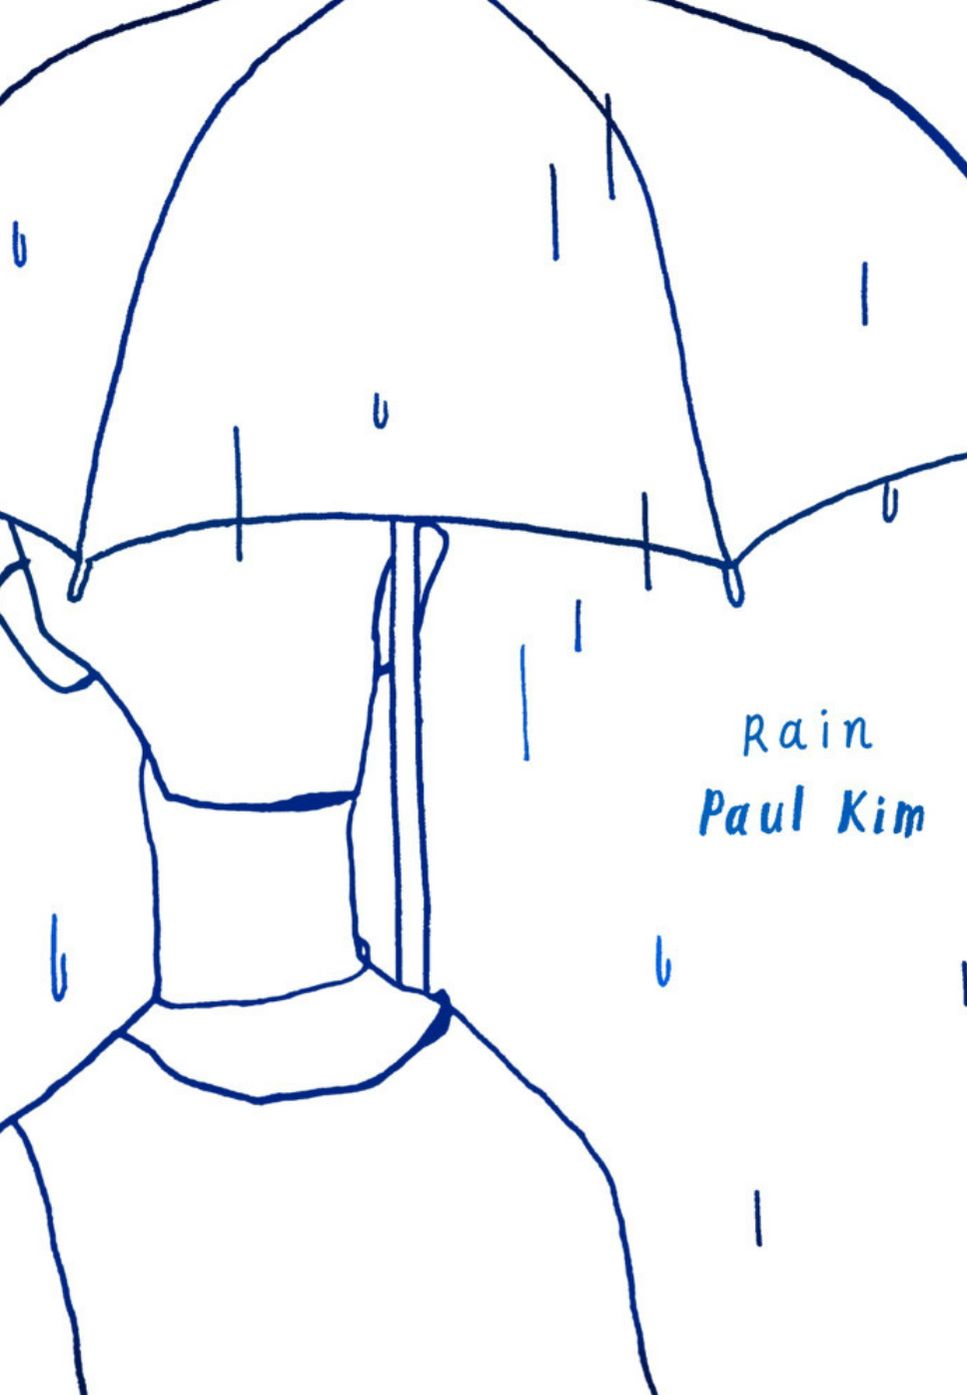 Paul Kim(폴킴) - Rain(비) (Includes Ckey) by PIANOSUMM